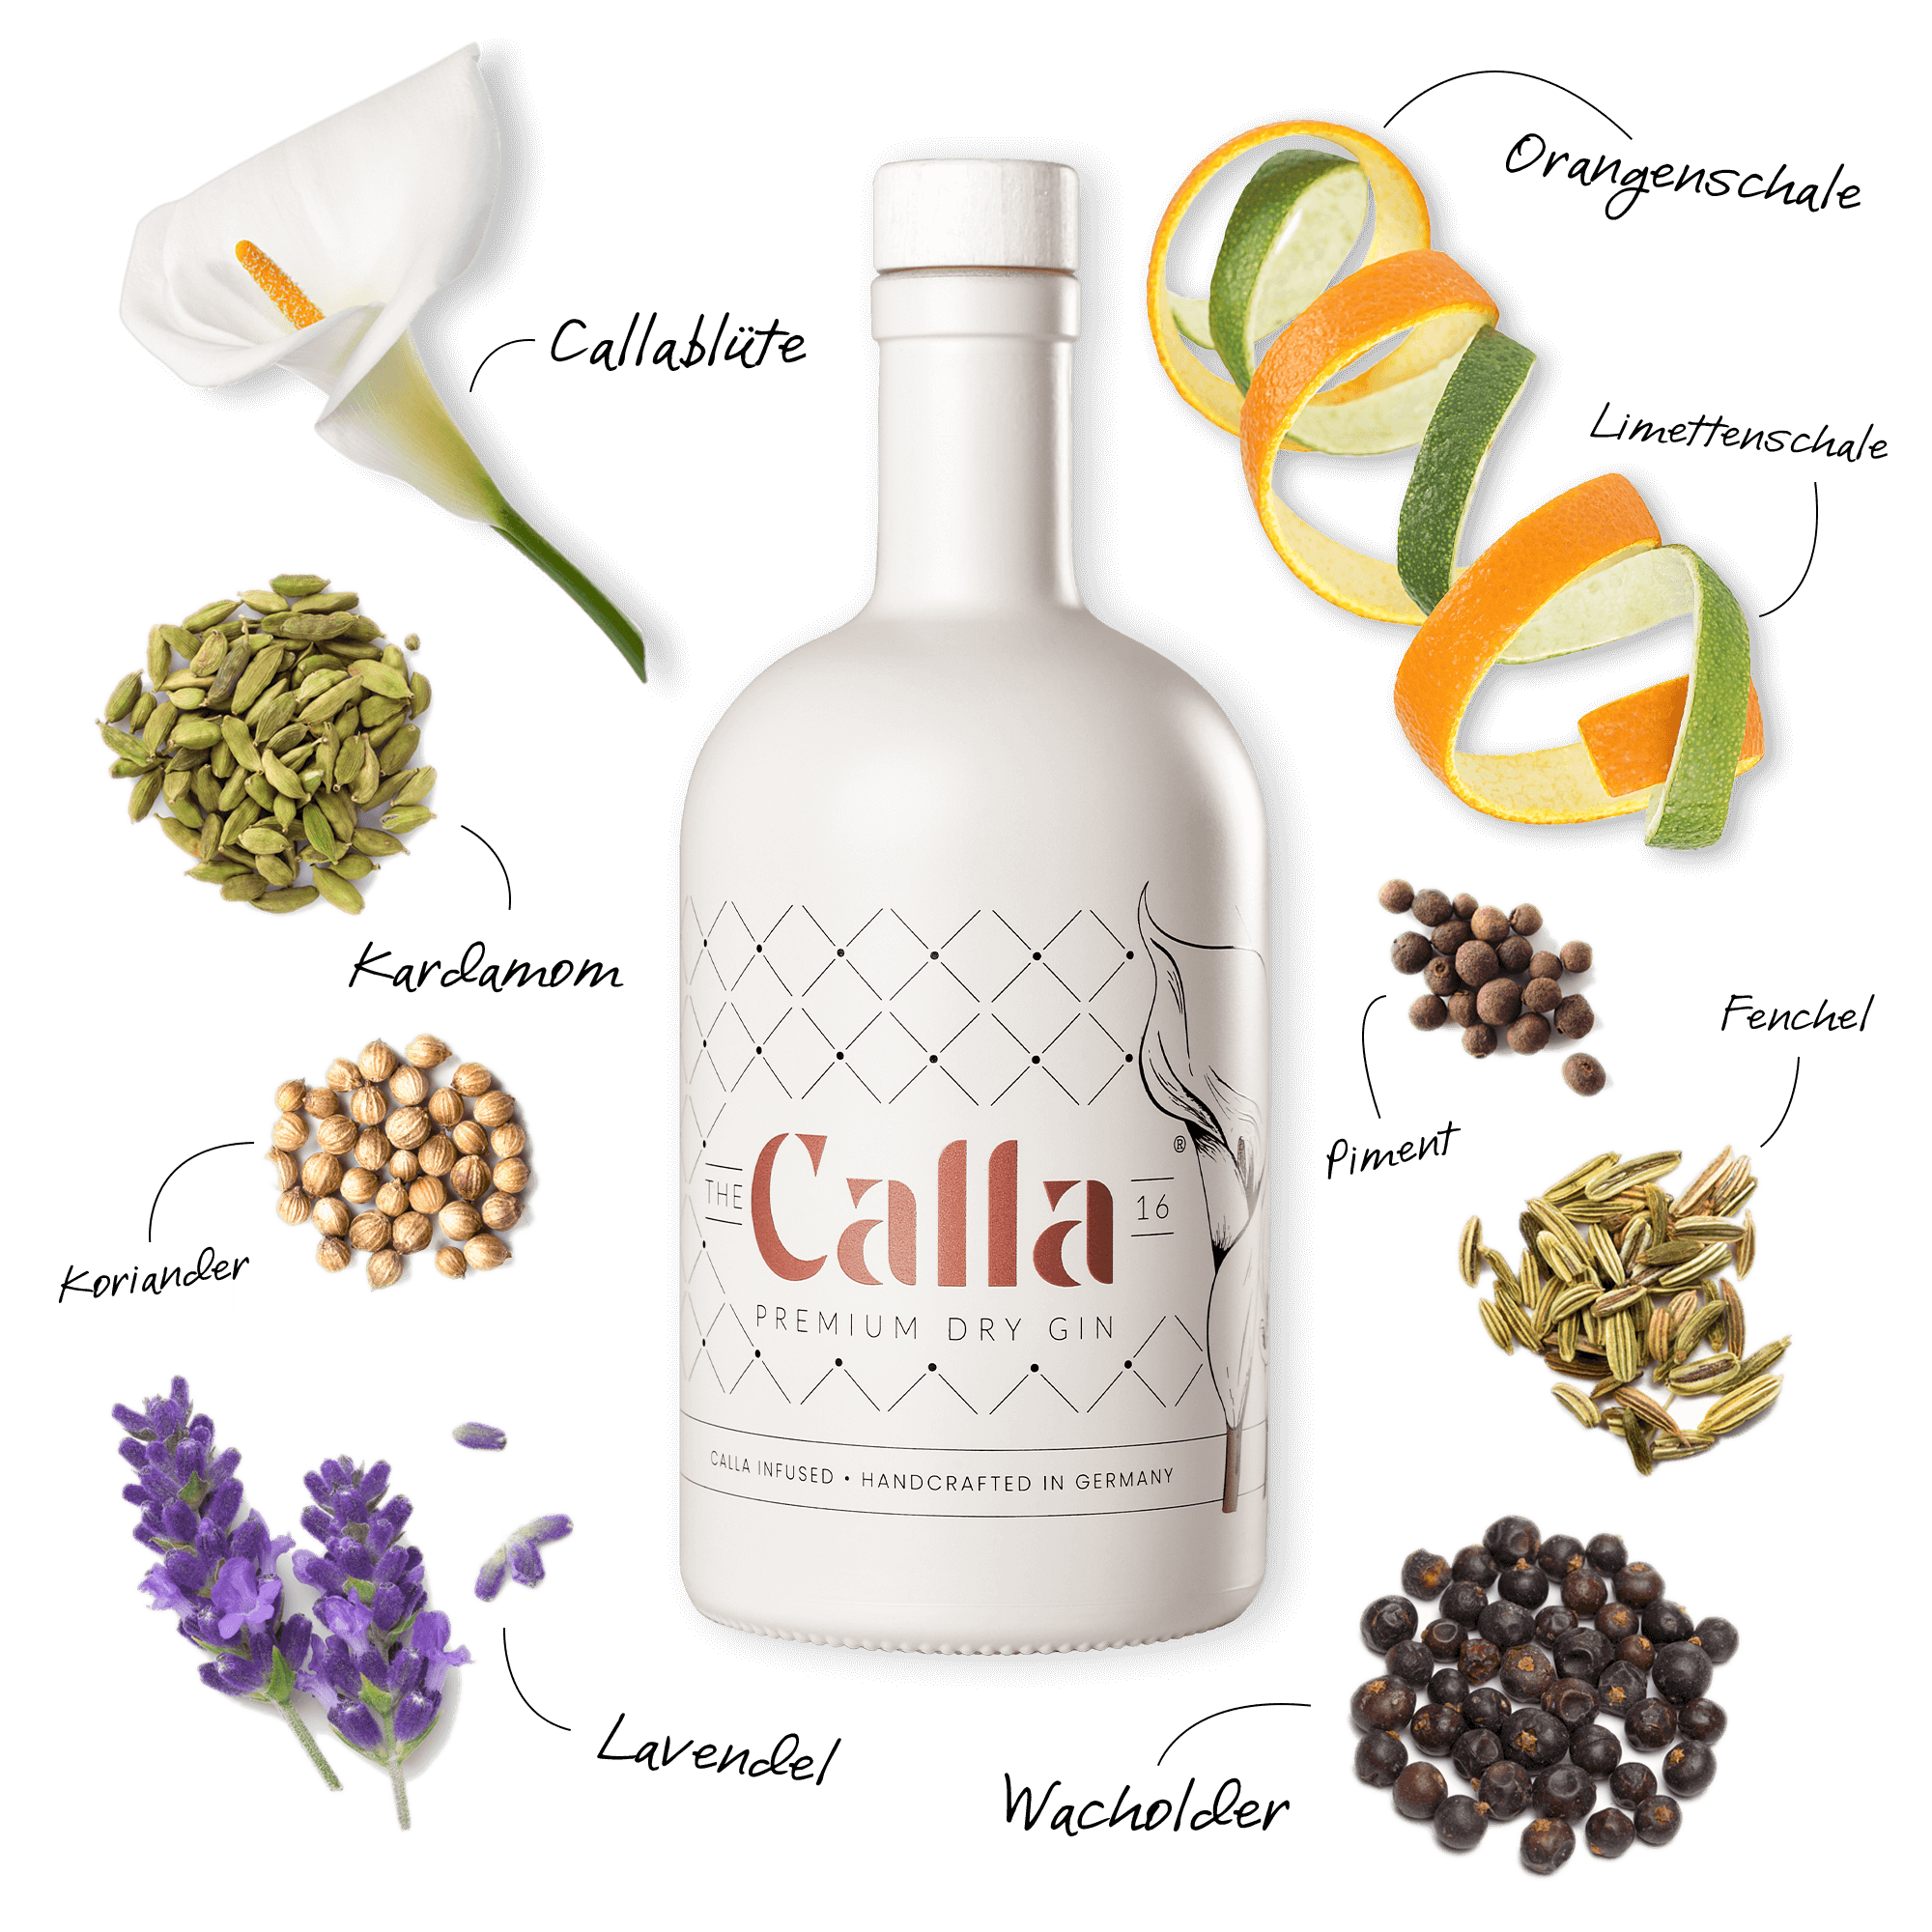 The Calla 16 Premium Dry Gin - Ruhrpott Gin